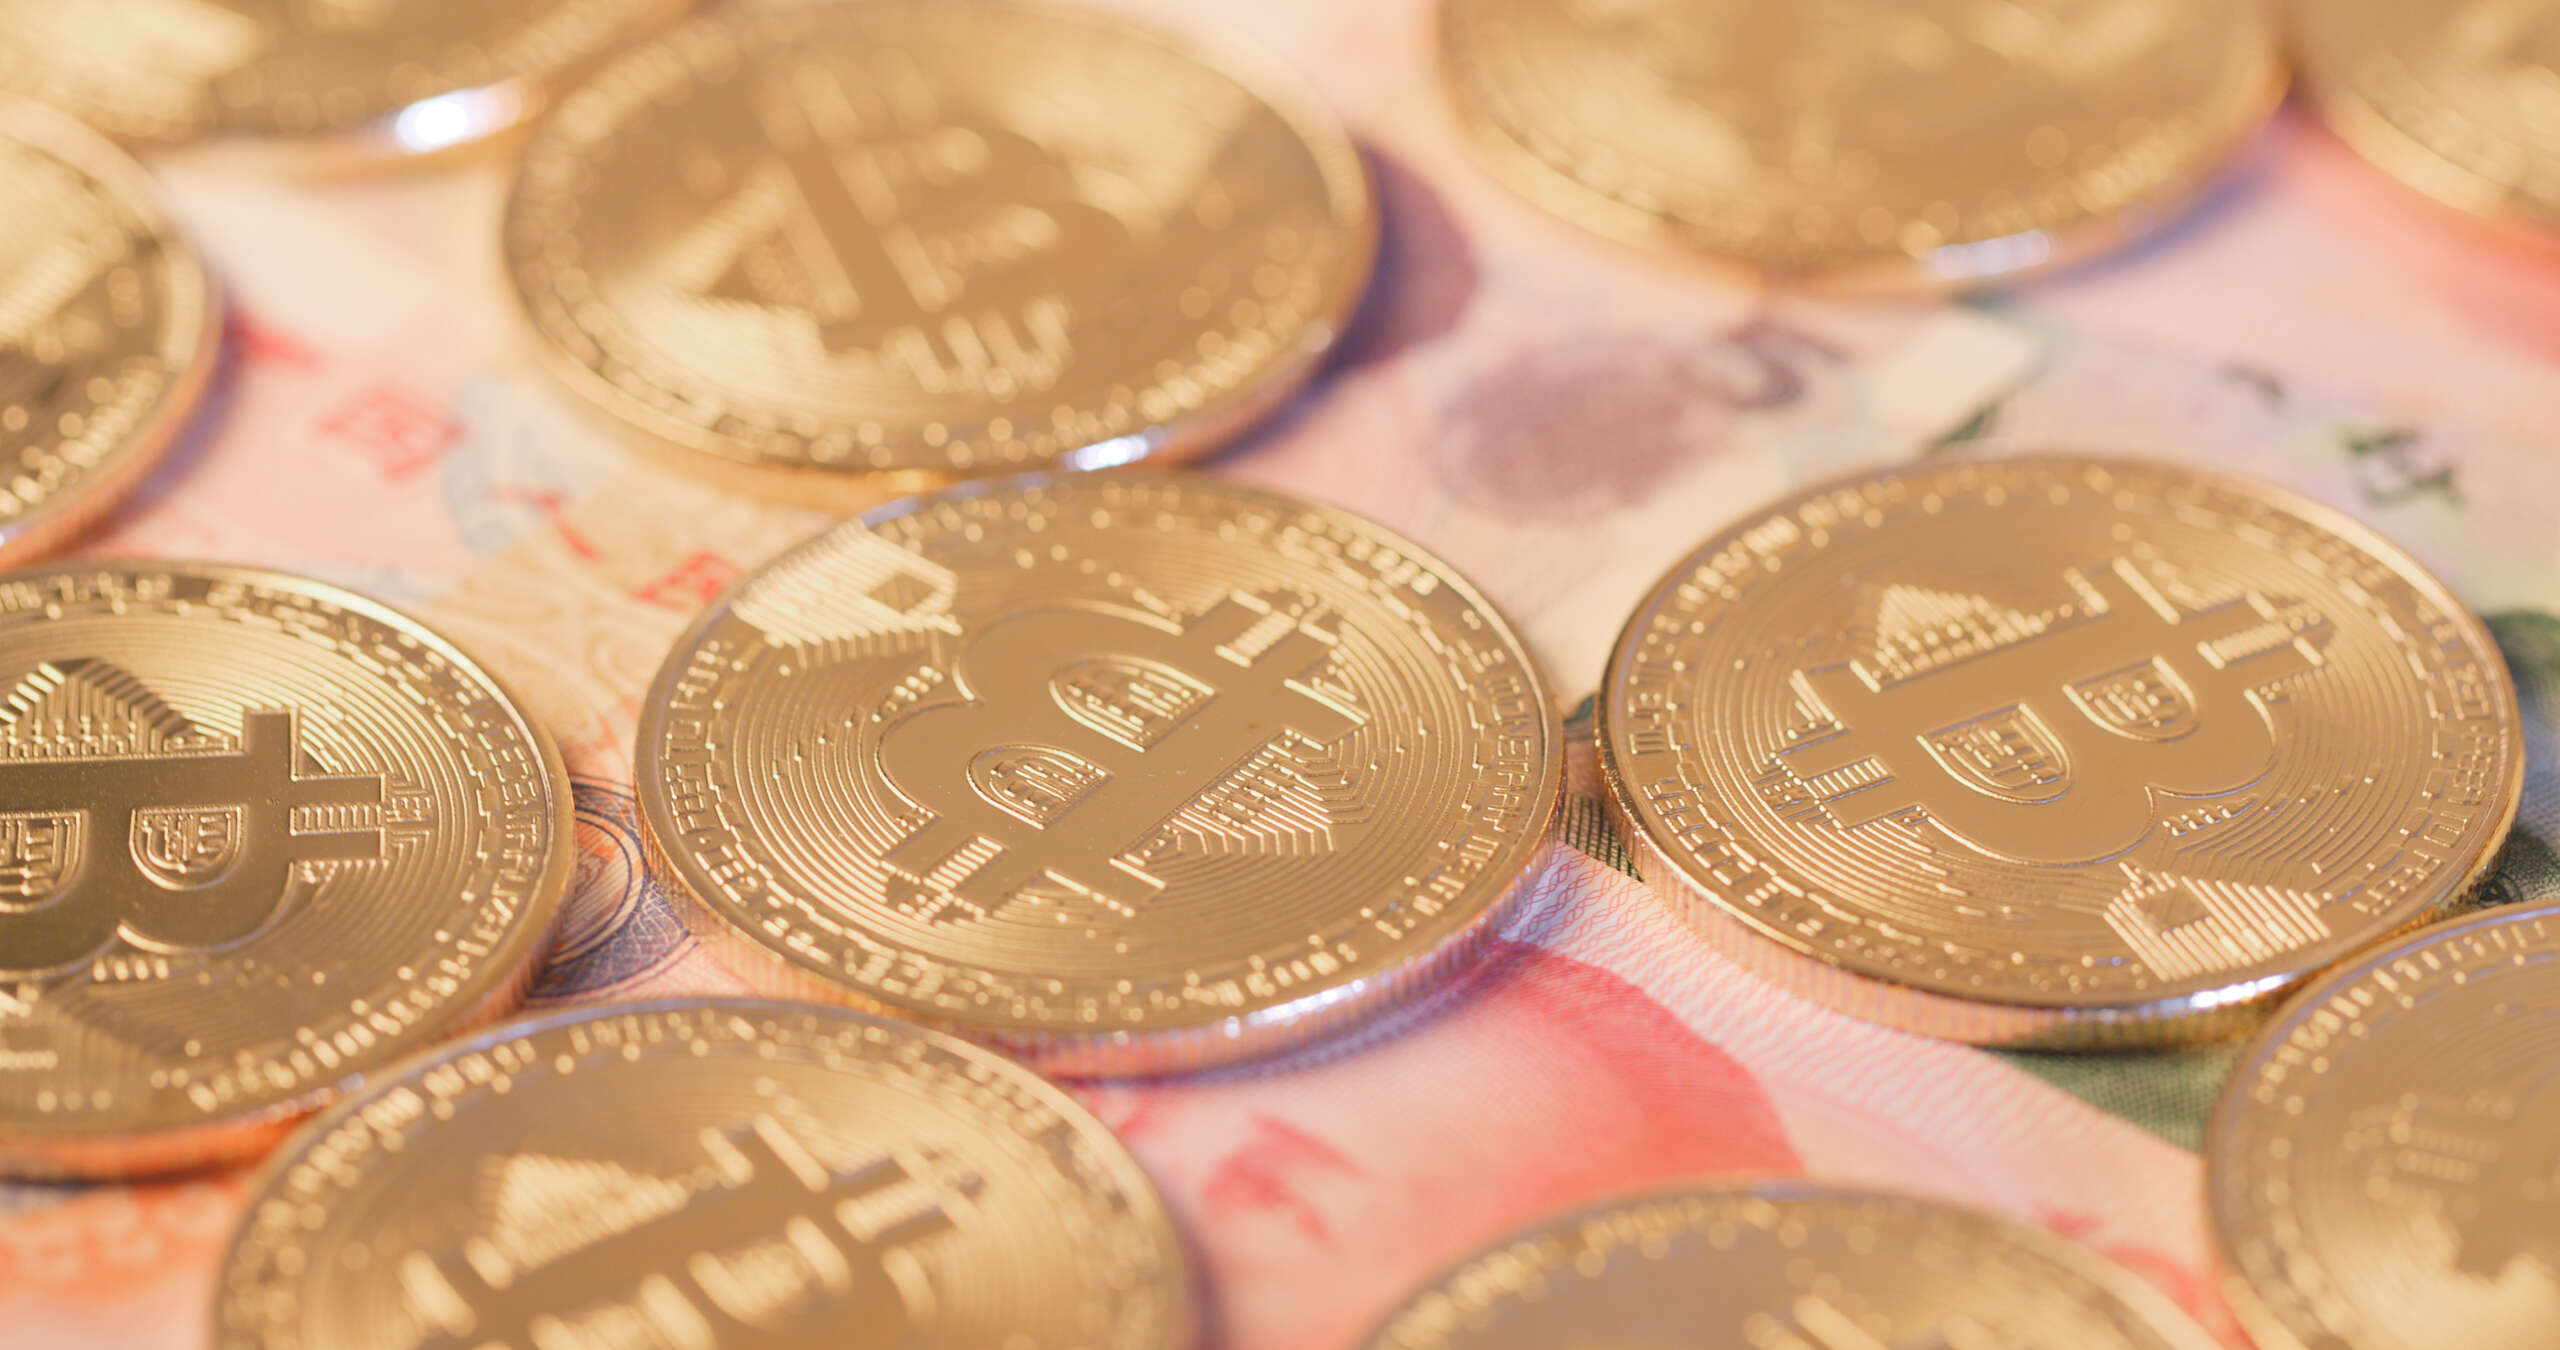 bitcoin-over-chinese-banknote-renminbi-2021-08-29-07-40-06-utc-scaled (1).jpg